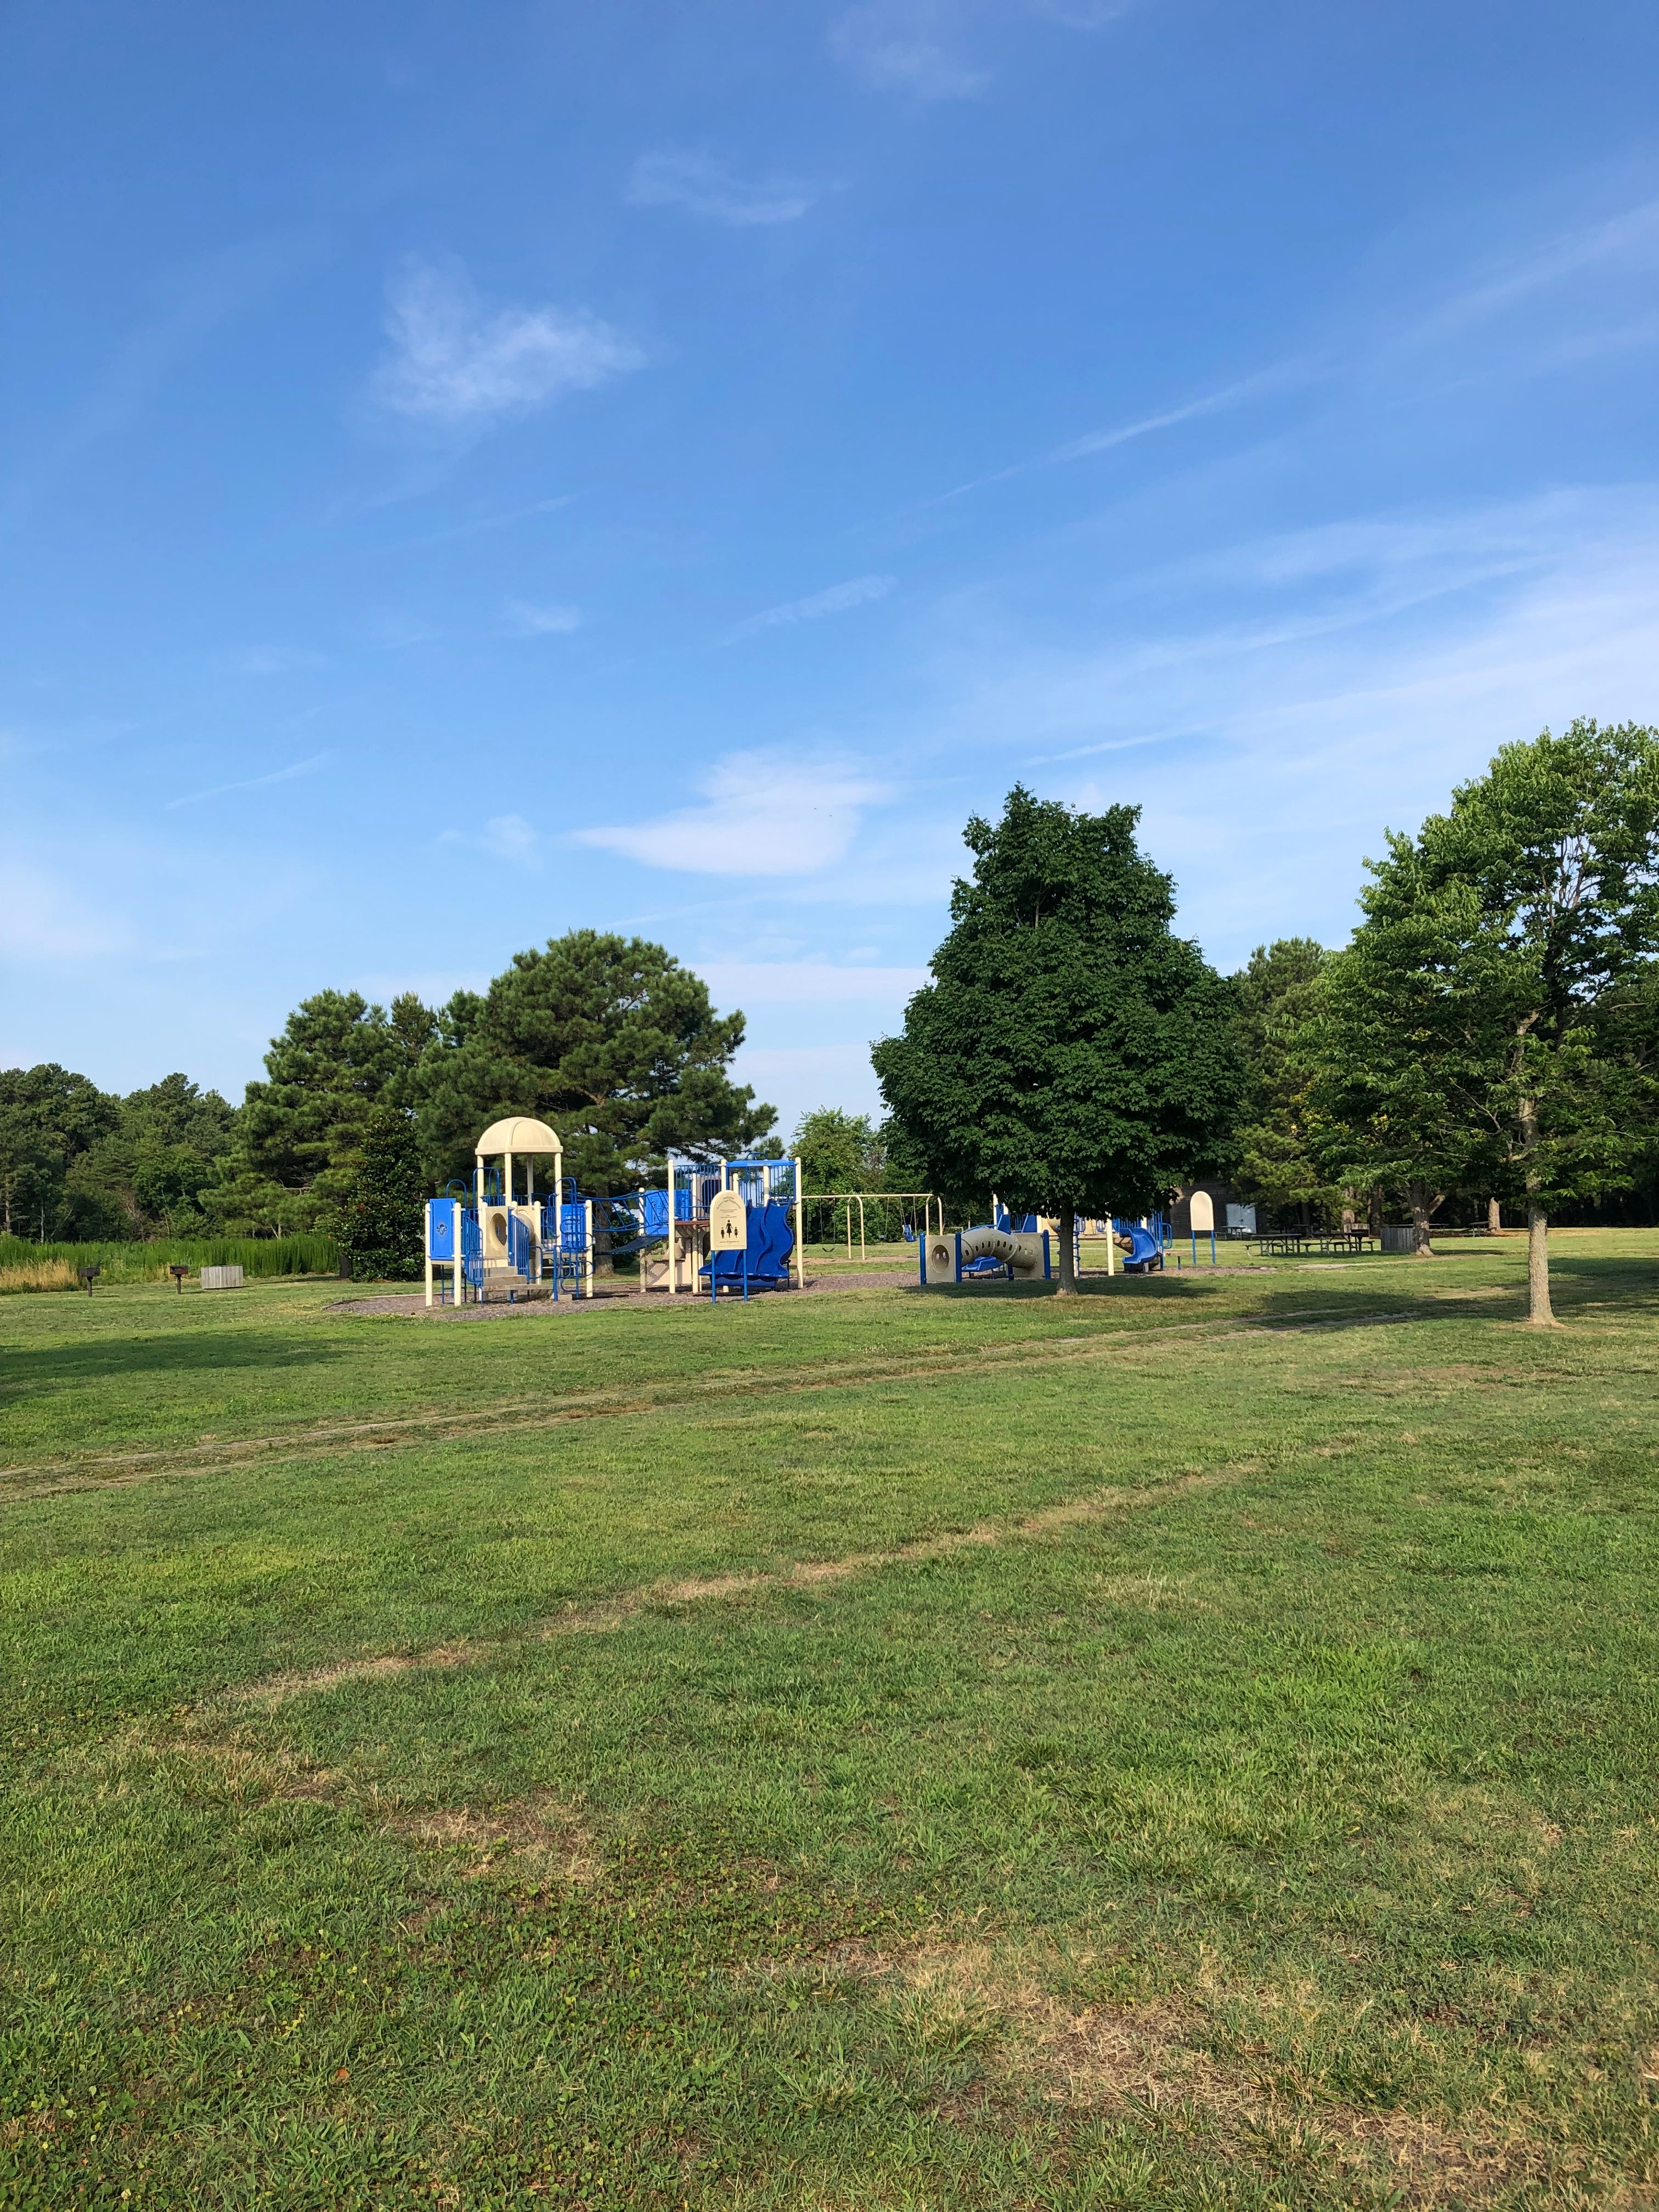 Playground/picnic area